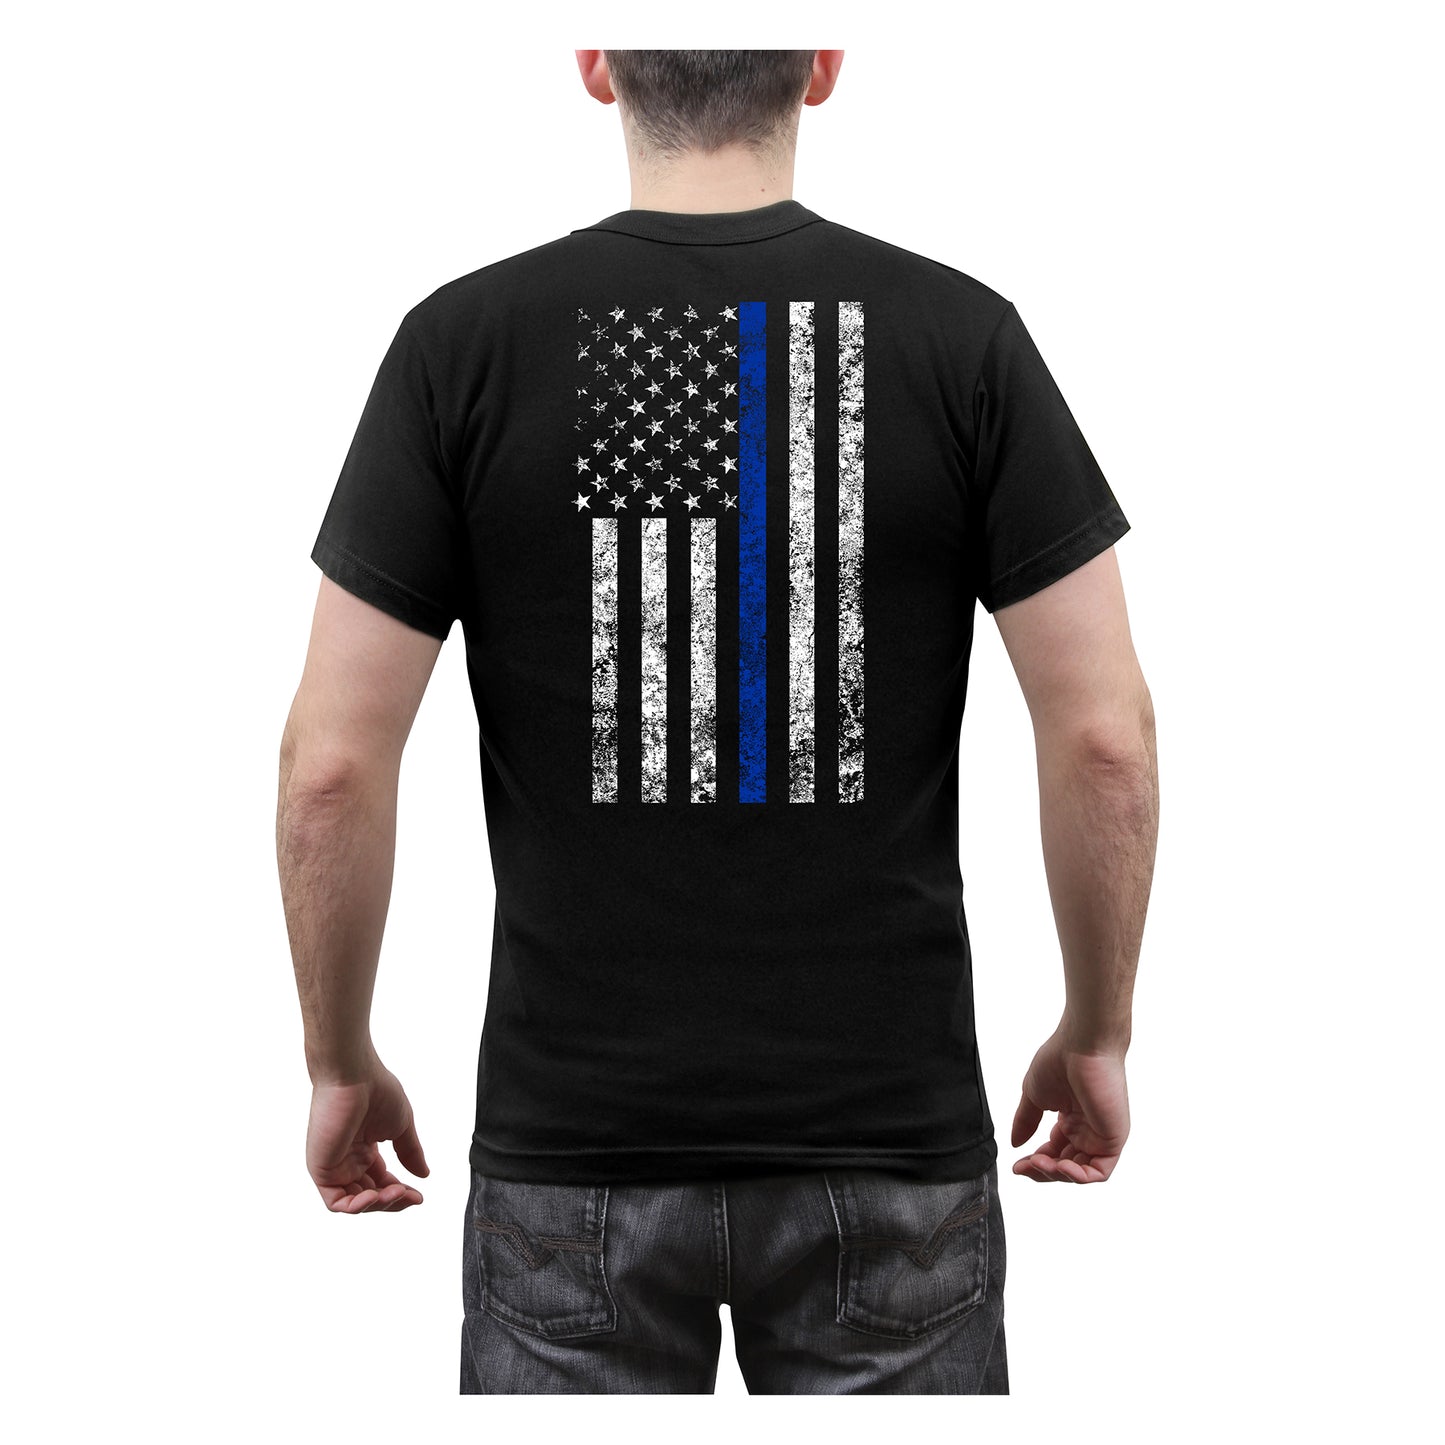 Rothco Thin Blue Line Shield T-Shirt - Men's Black TBL US Flag Tee With Shield